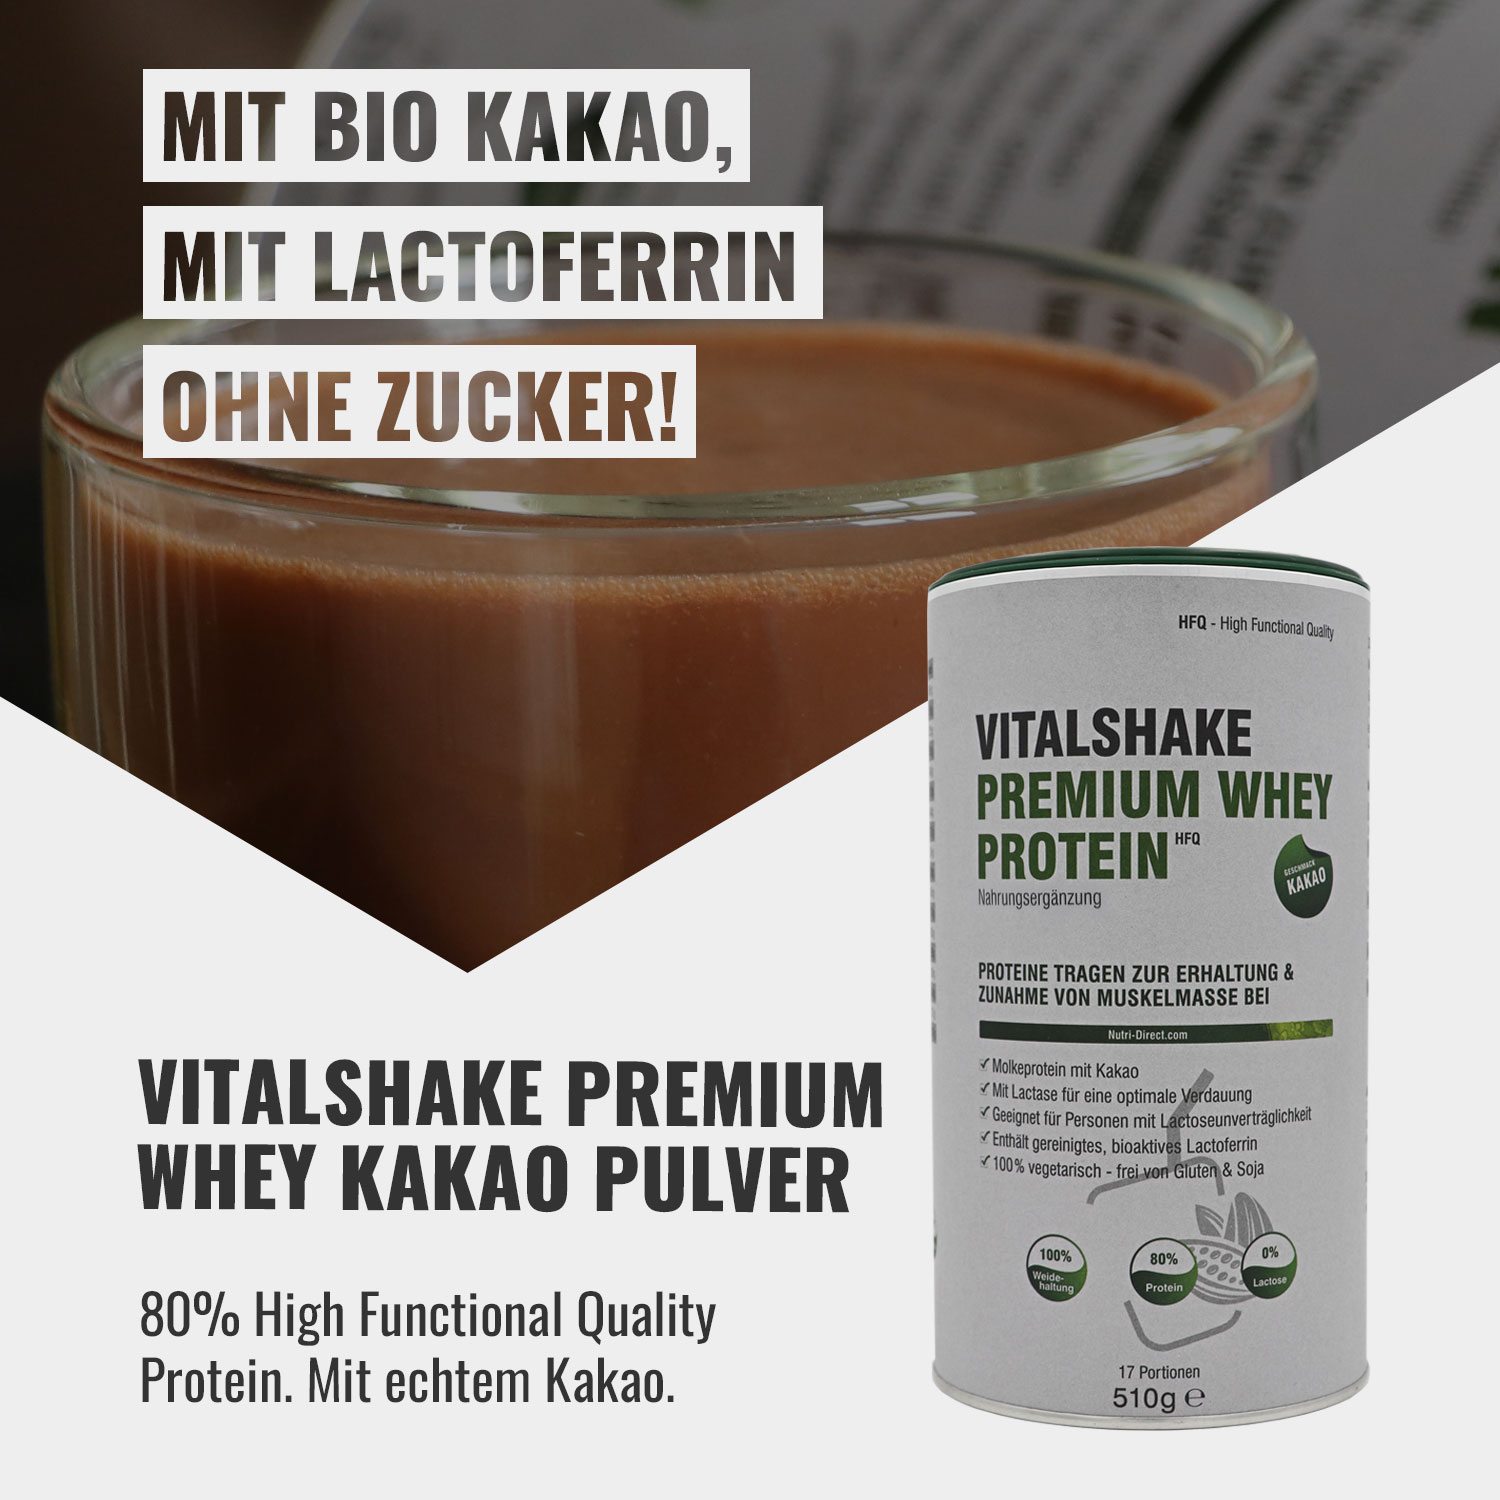 Vitalshake Premium Whey Protein mit echtem Kakao